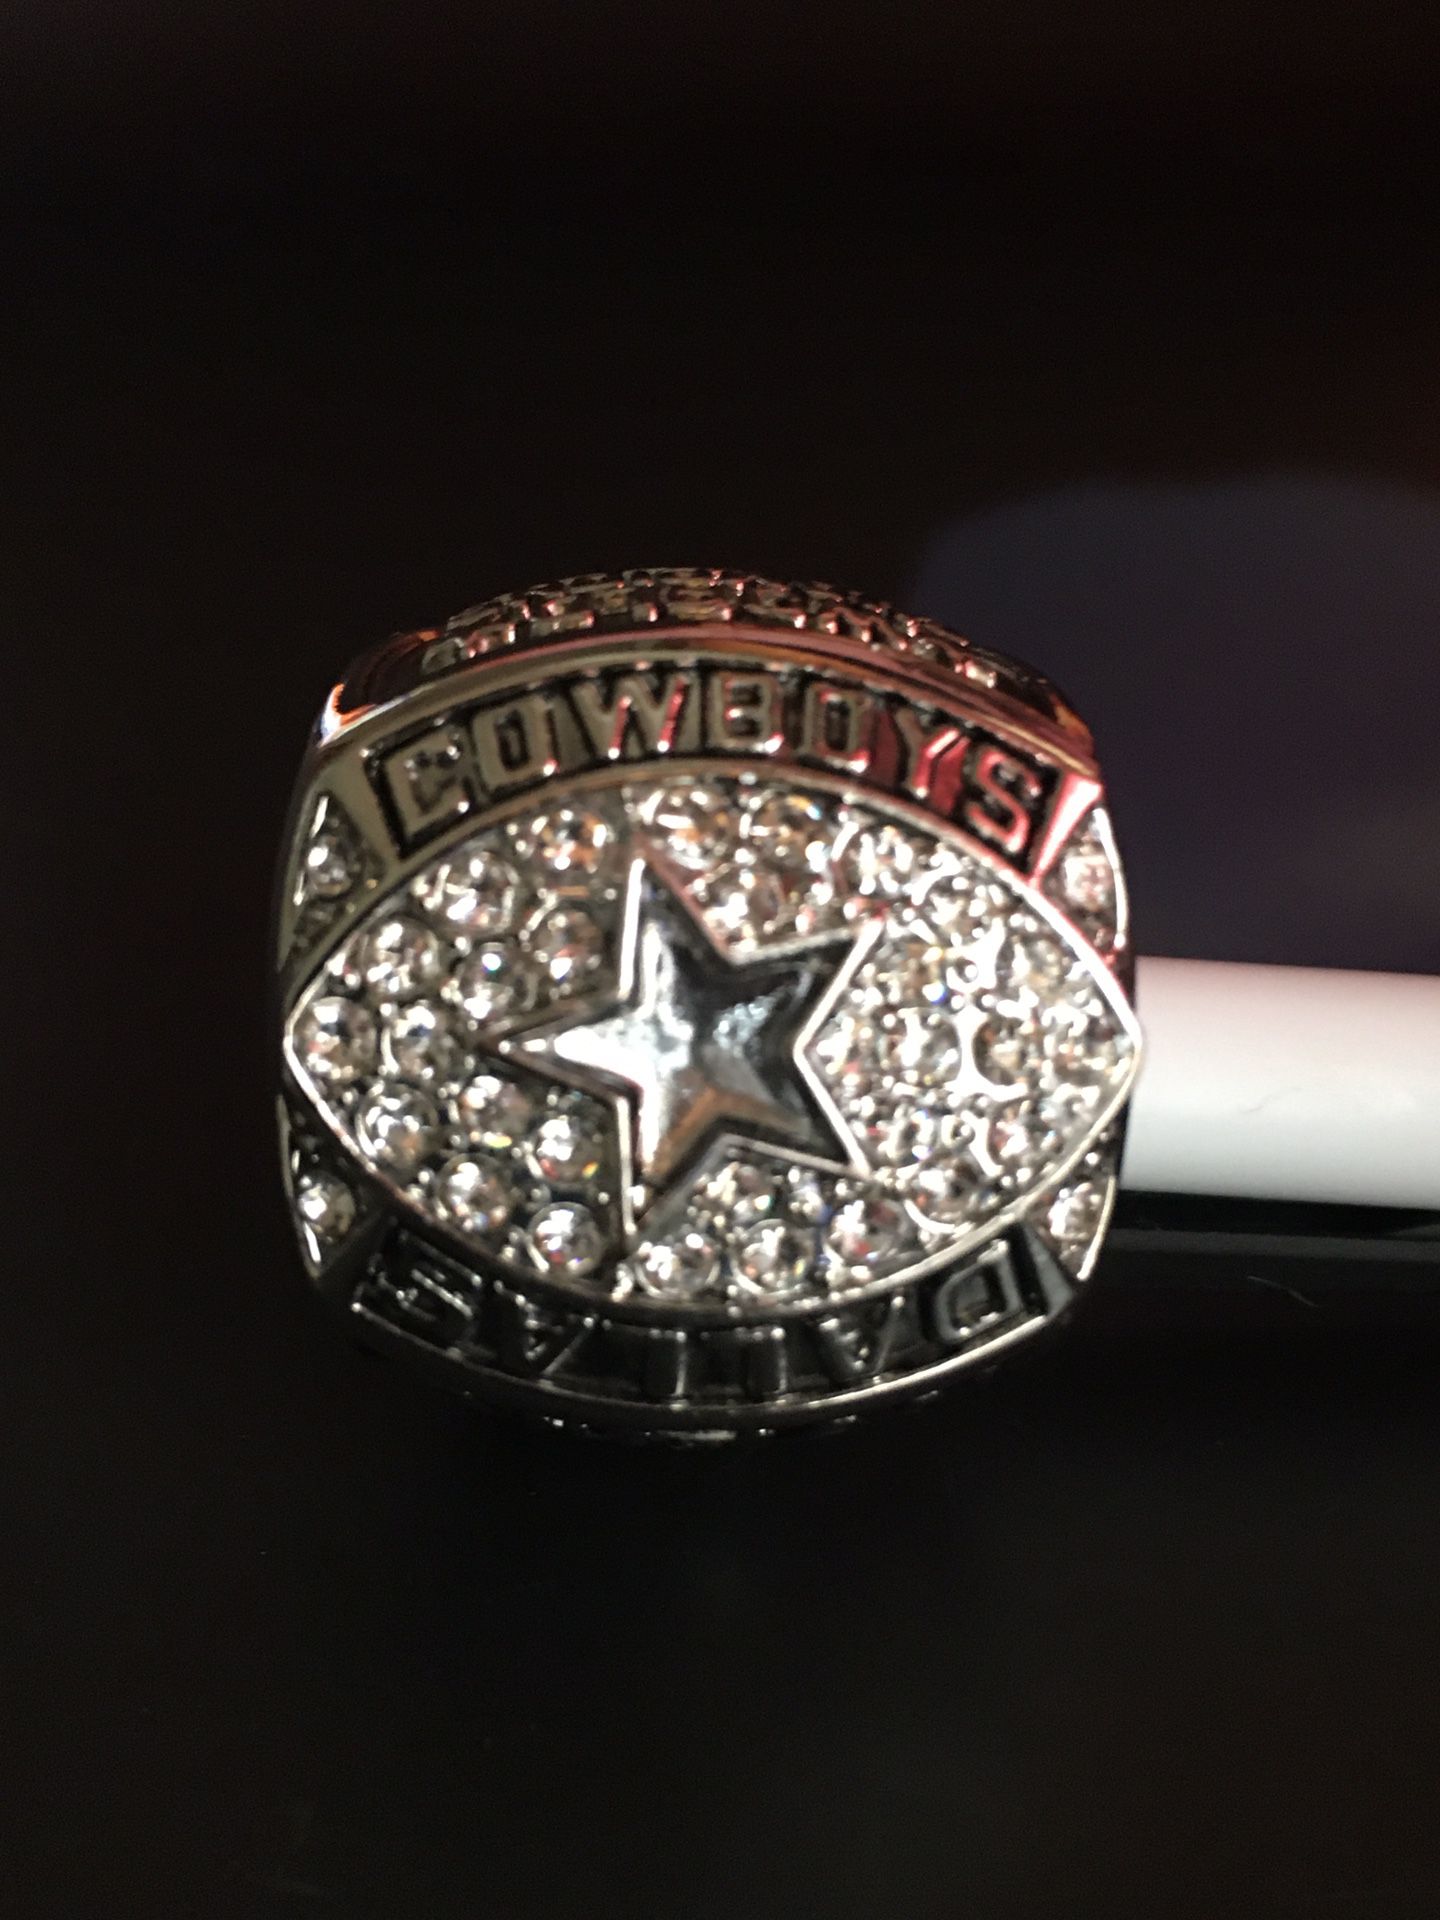 1992 Dallas Cowboys Super Bowl fan appreciation ring (brand new)